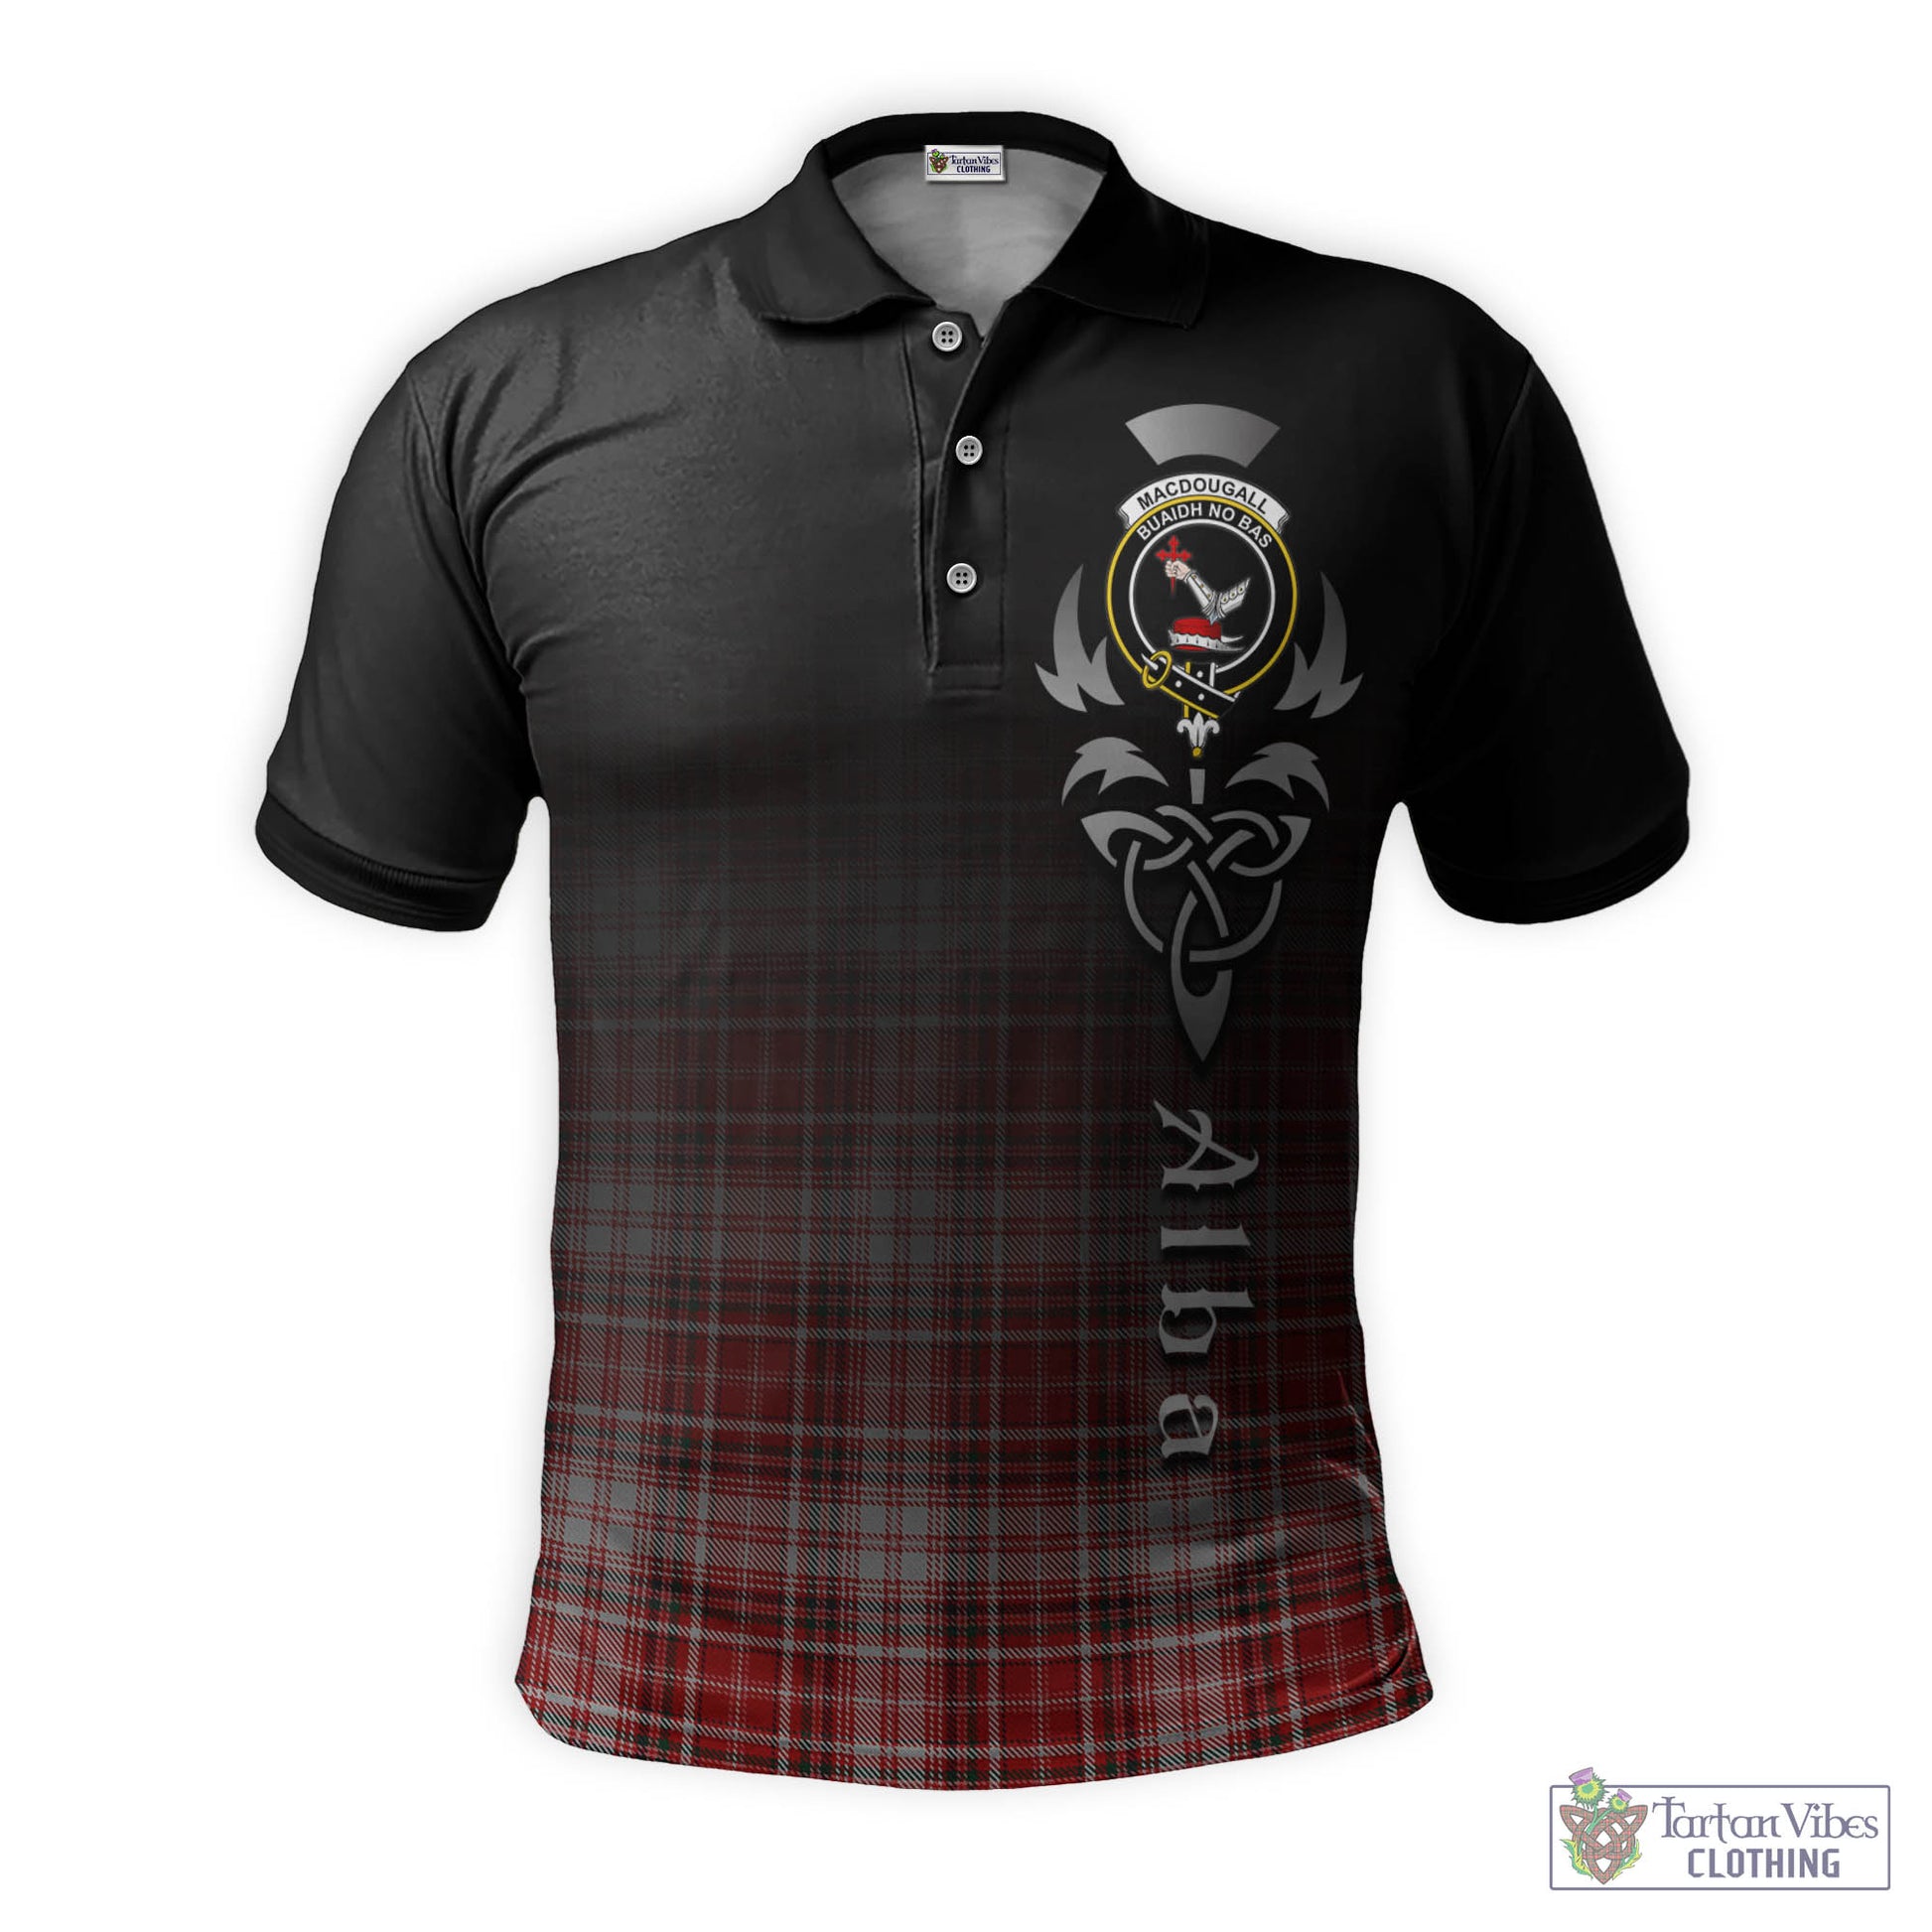 Tartan Vibes Clothing MacDougall Dress Tartan Polo Shirt Featuring Alba Gu Brath Family Crest Celtic Inspired